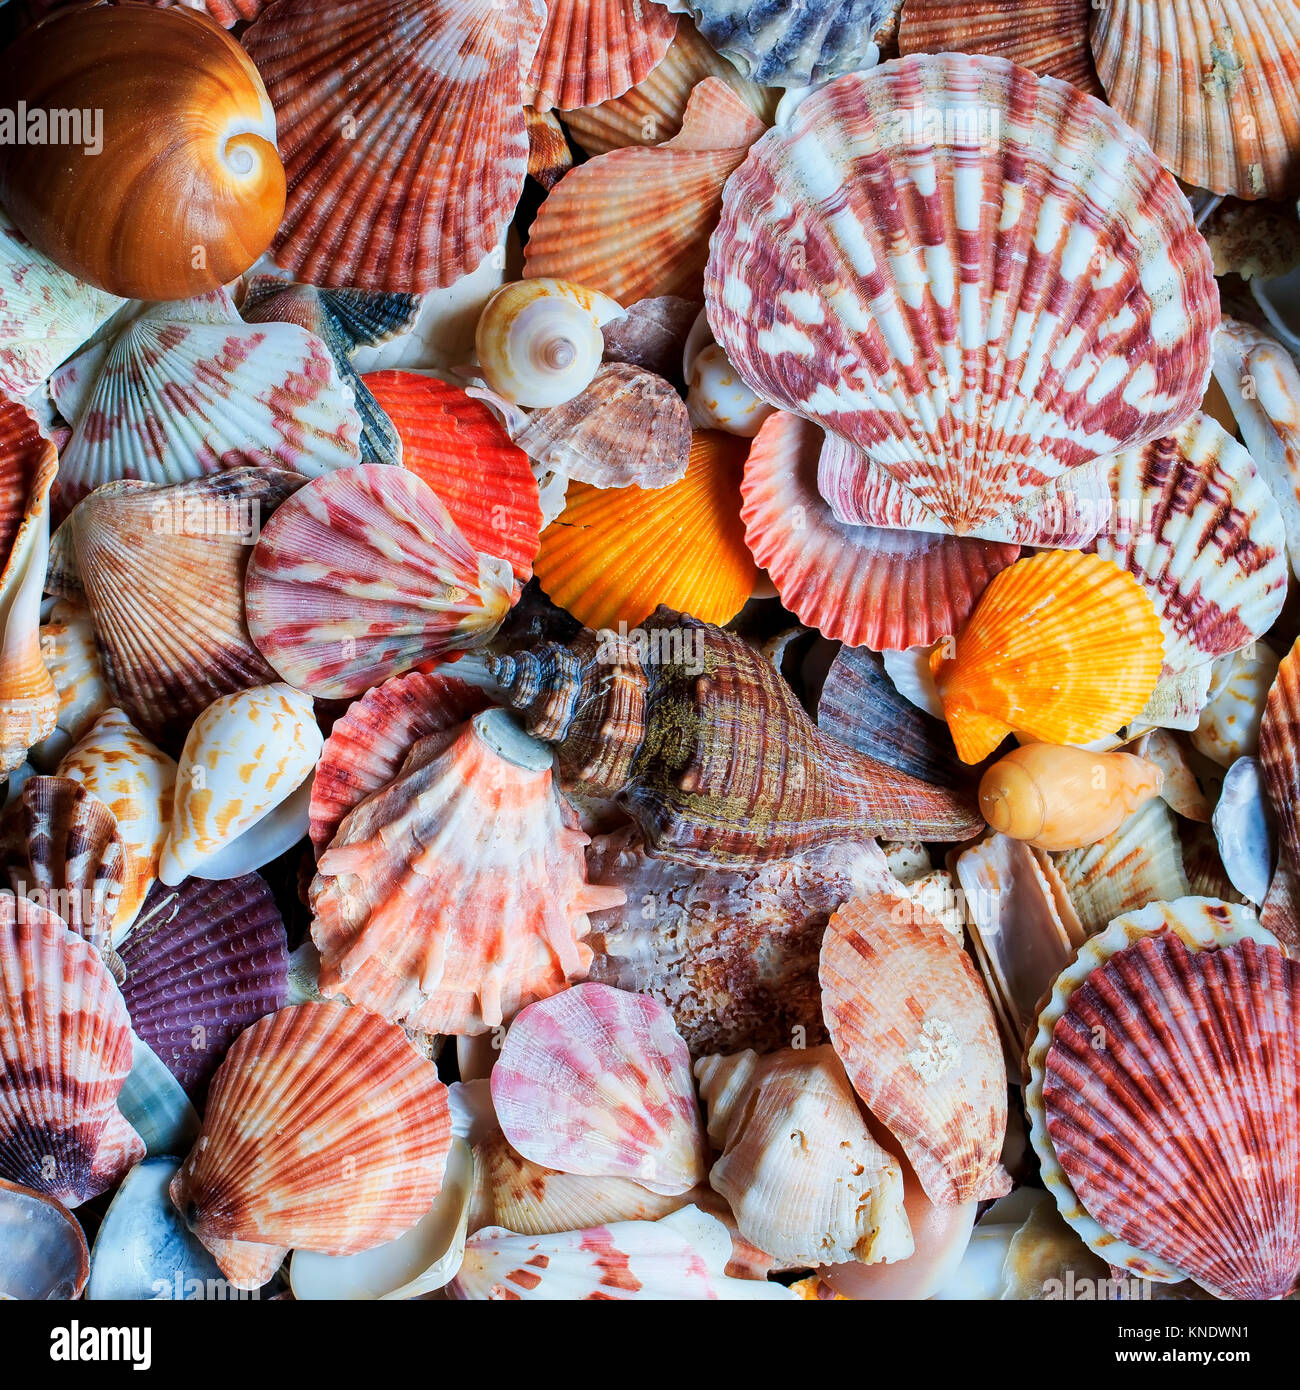 Wallpaper Colorful seashells decoration 3840x2160 UHD 4K Picture Image